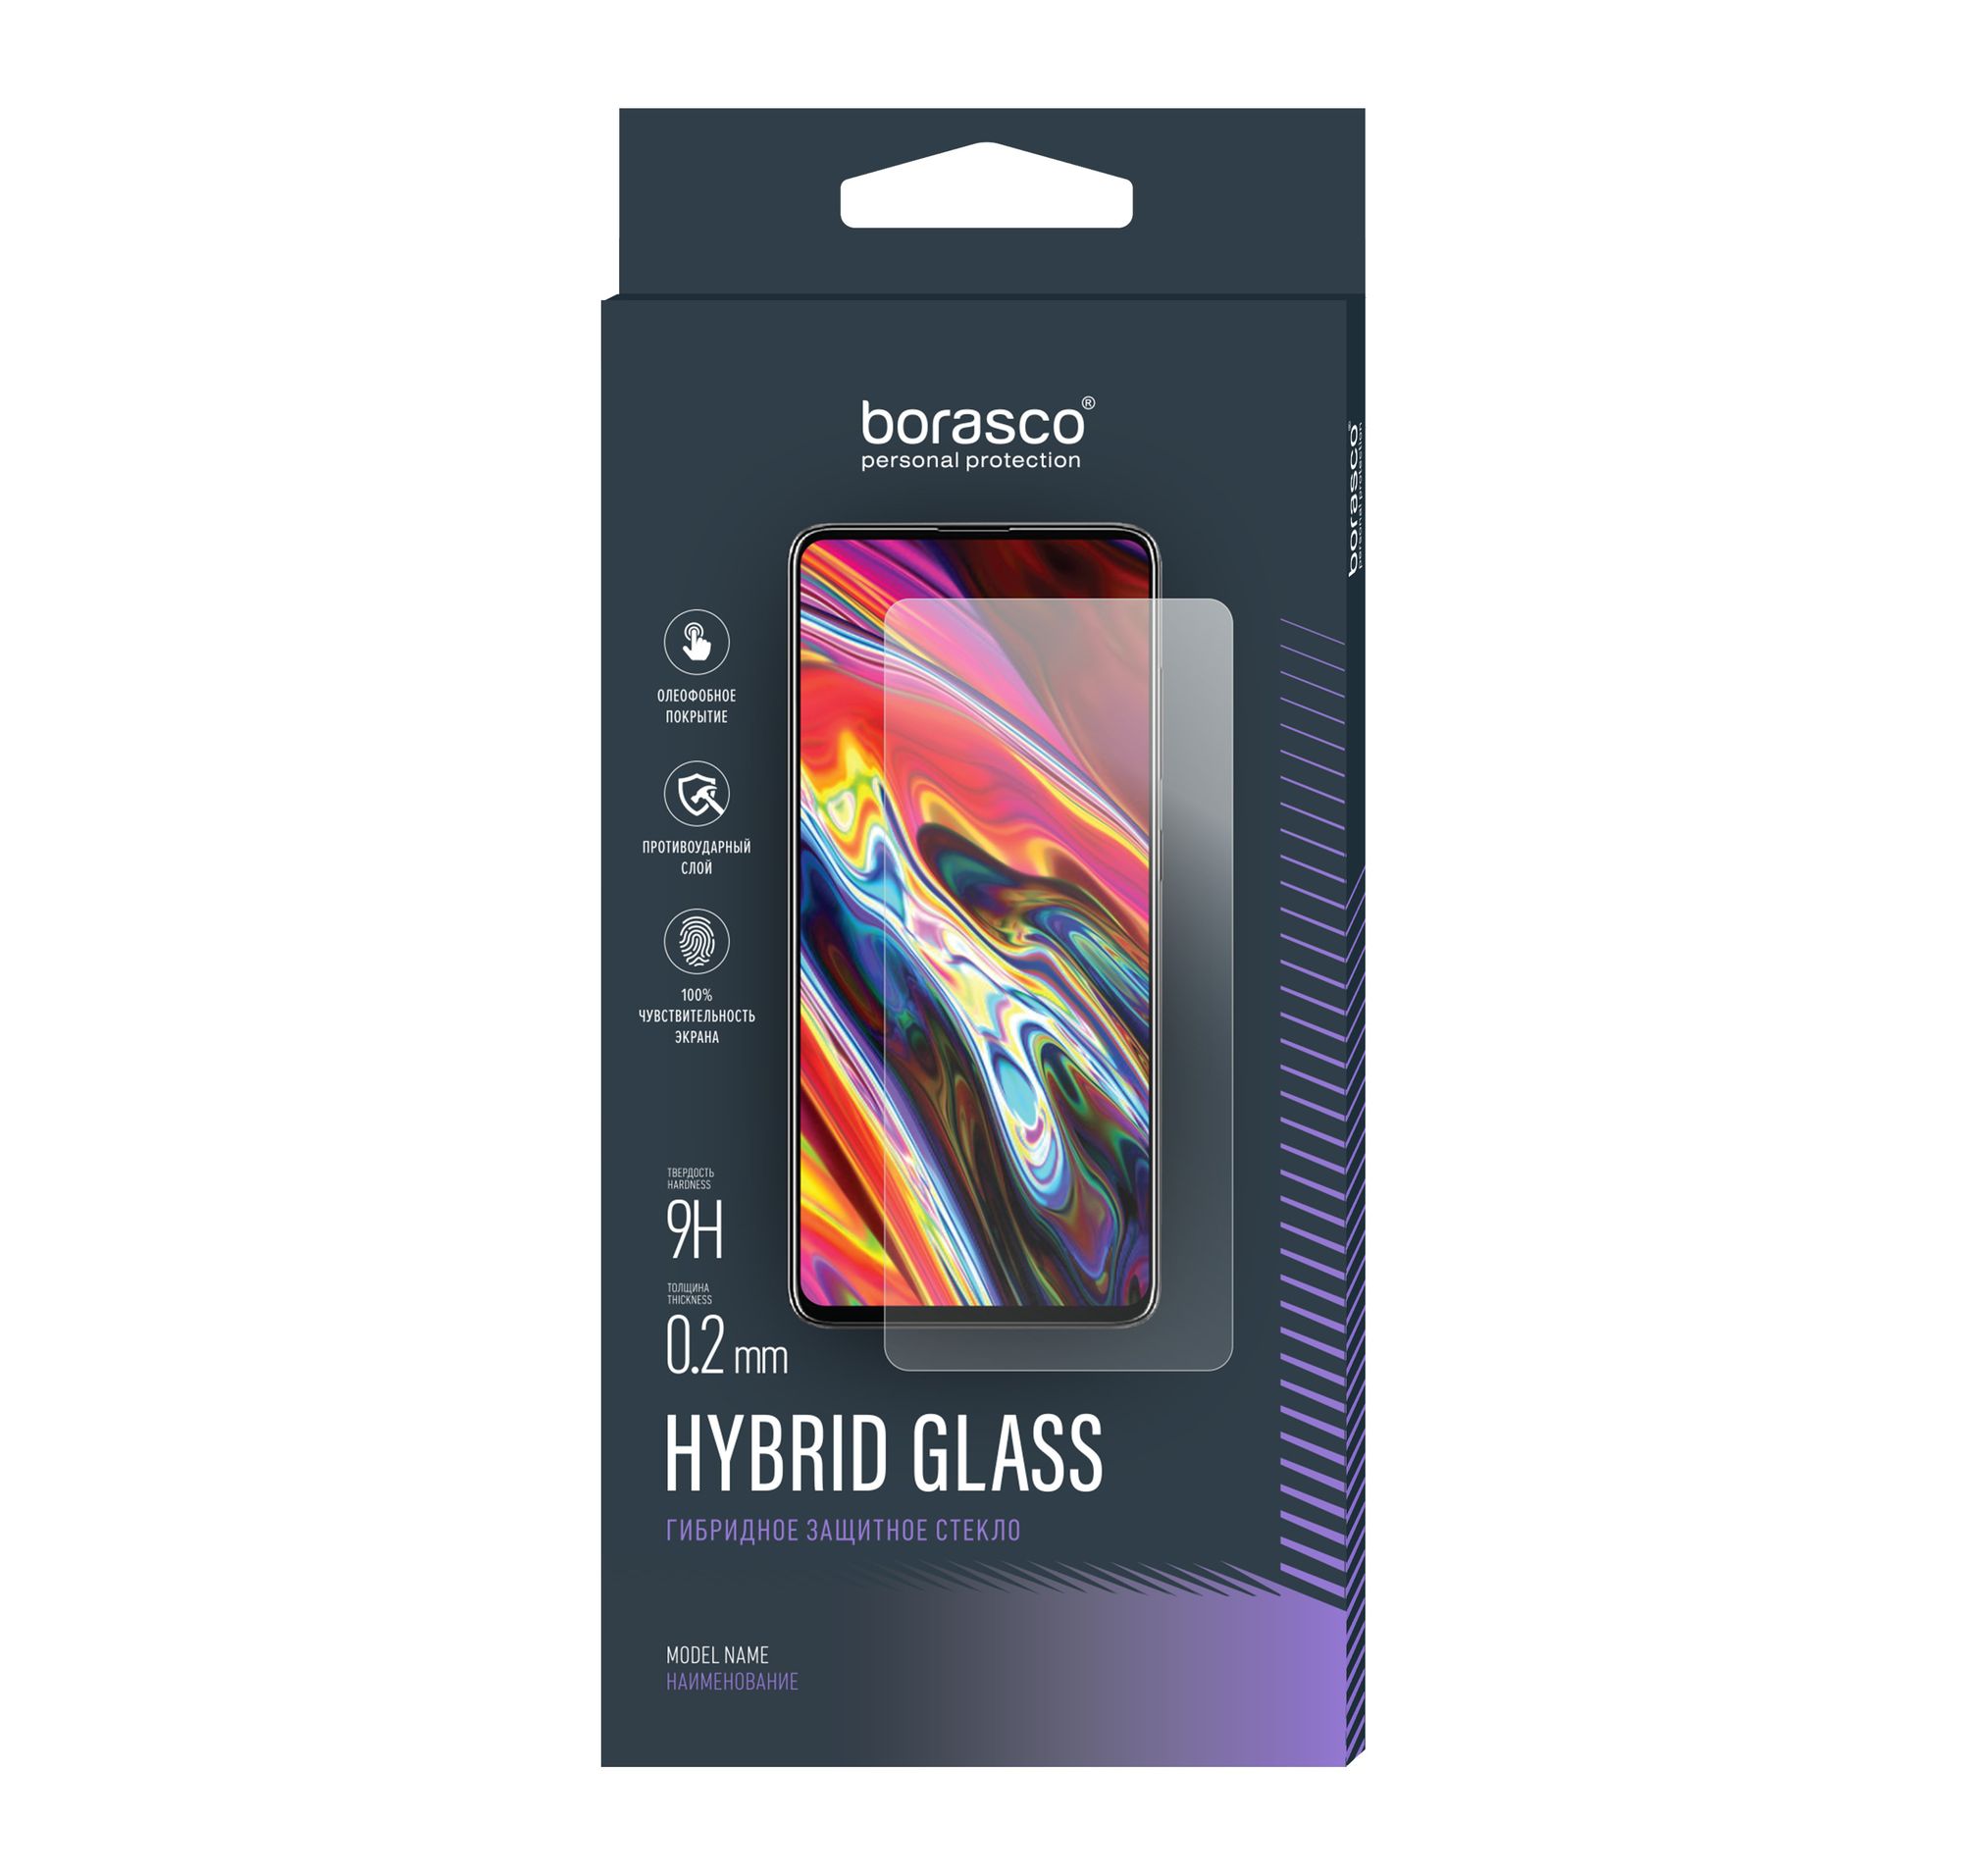 Стекло защитное Hybrid Glass VSP 0,26 мм для Sony Xperia X Performance/ X Performance dual противоударное стекло для sony d2302 xperia m2 dual d2303 d2305 xperia m2